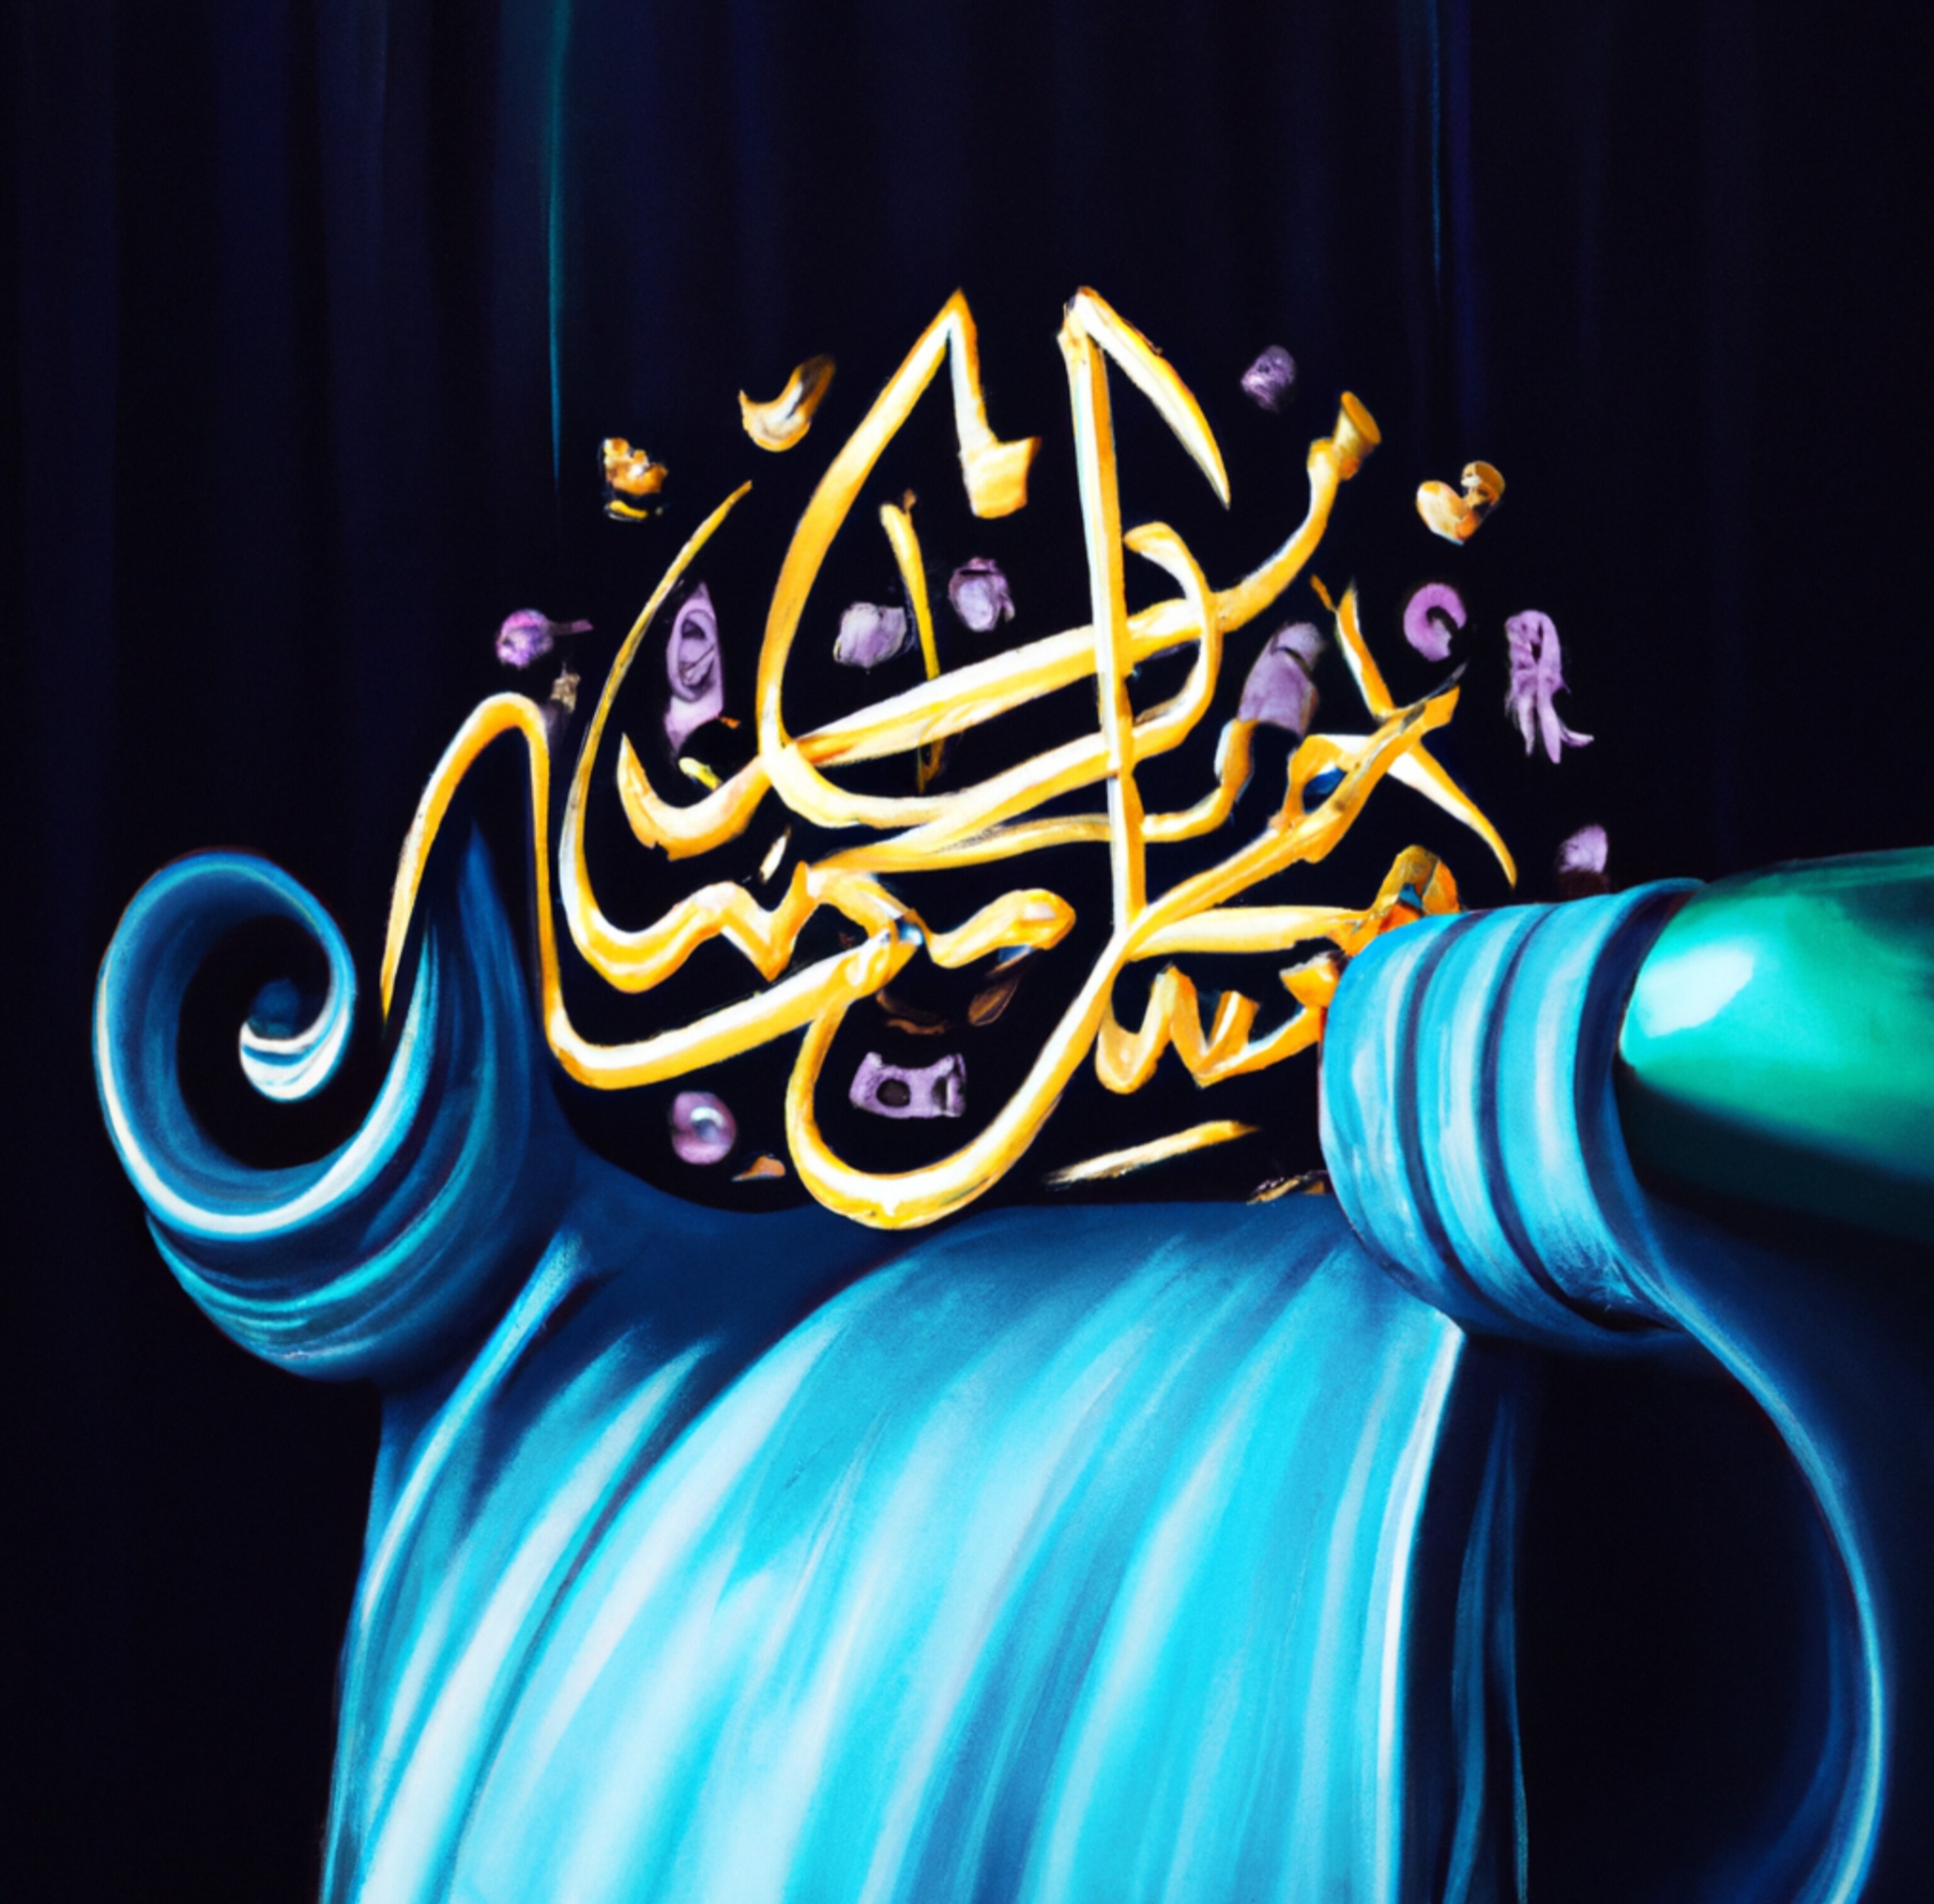 <a href="https://www.pshterate.com/"><img src="Surah Al Quraisy Kaligrafi Moto Ilustrasi.jpg" alt="Surah Al Quraisy: menjelaskan tentang Suku Quraisy"></a>